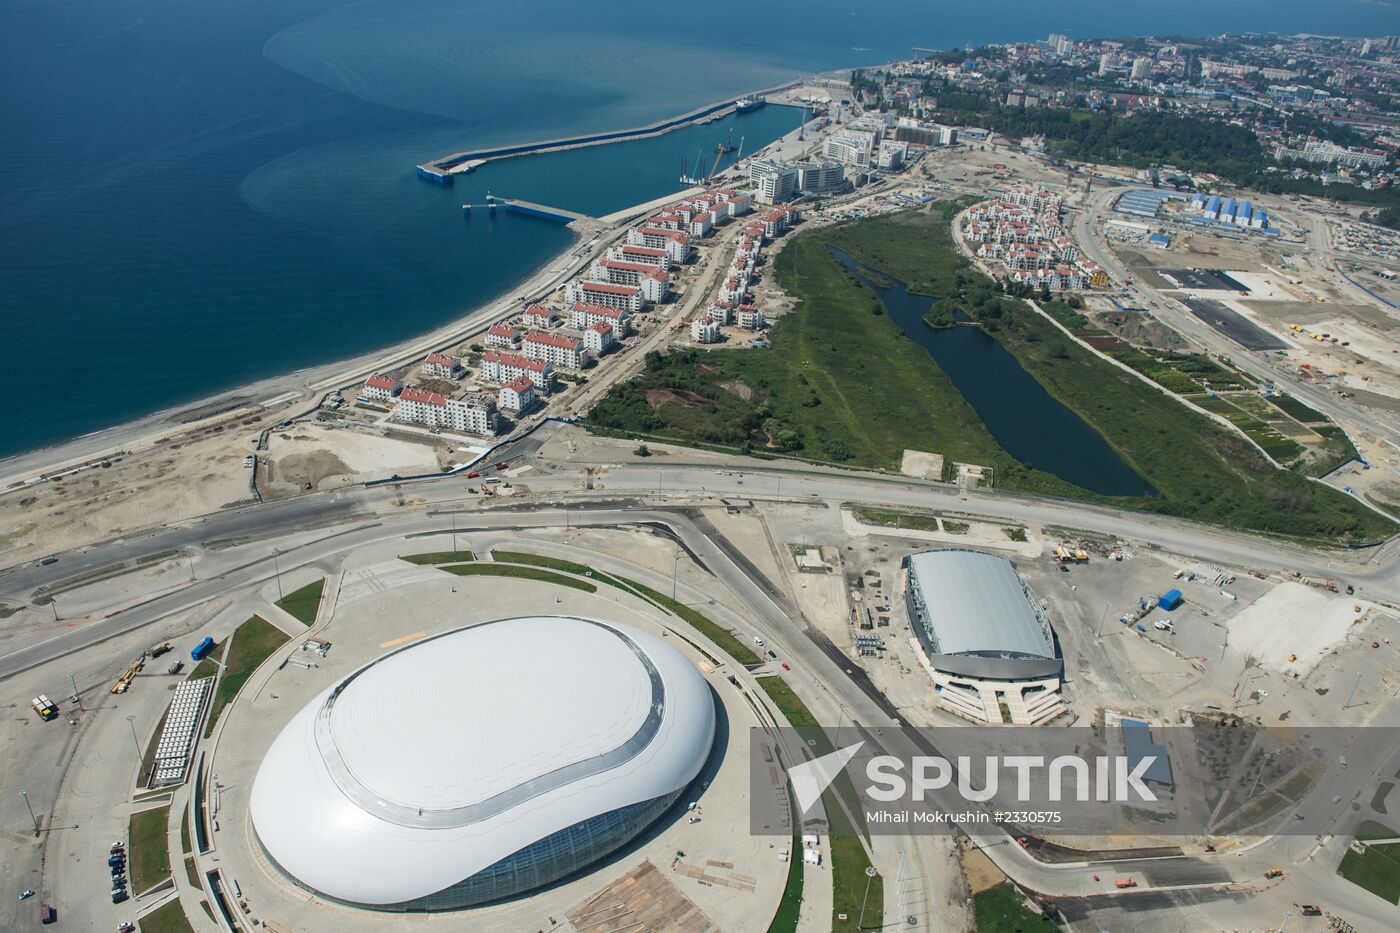 Bird's eye view of Olympic Park in Sochi